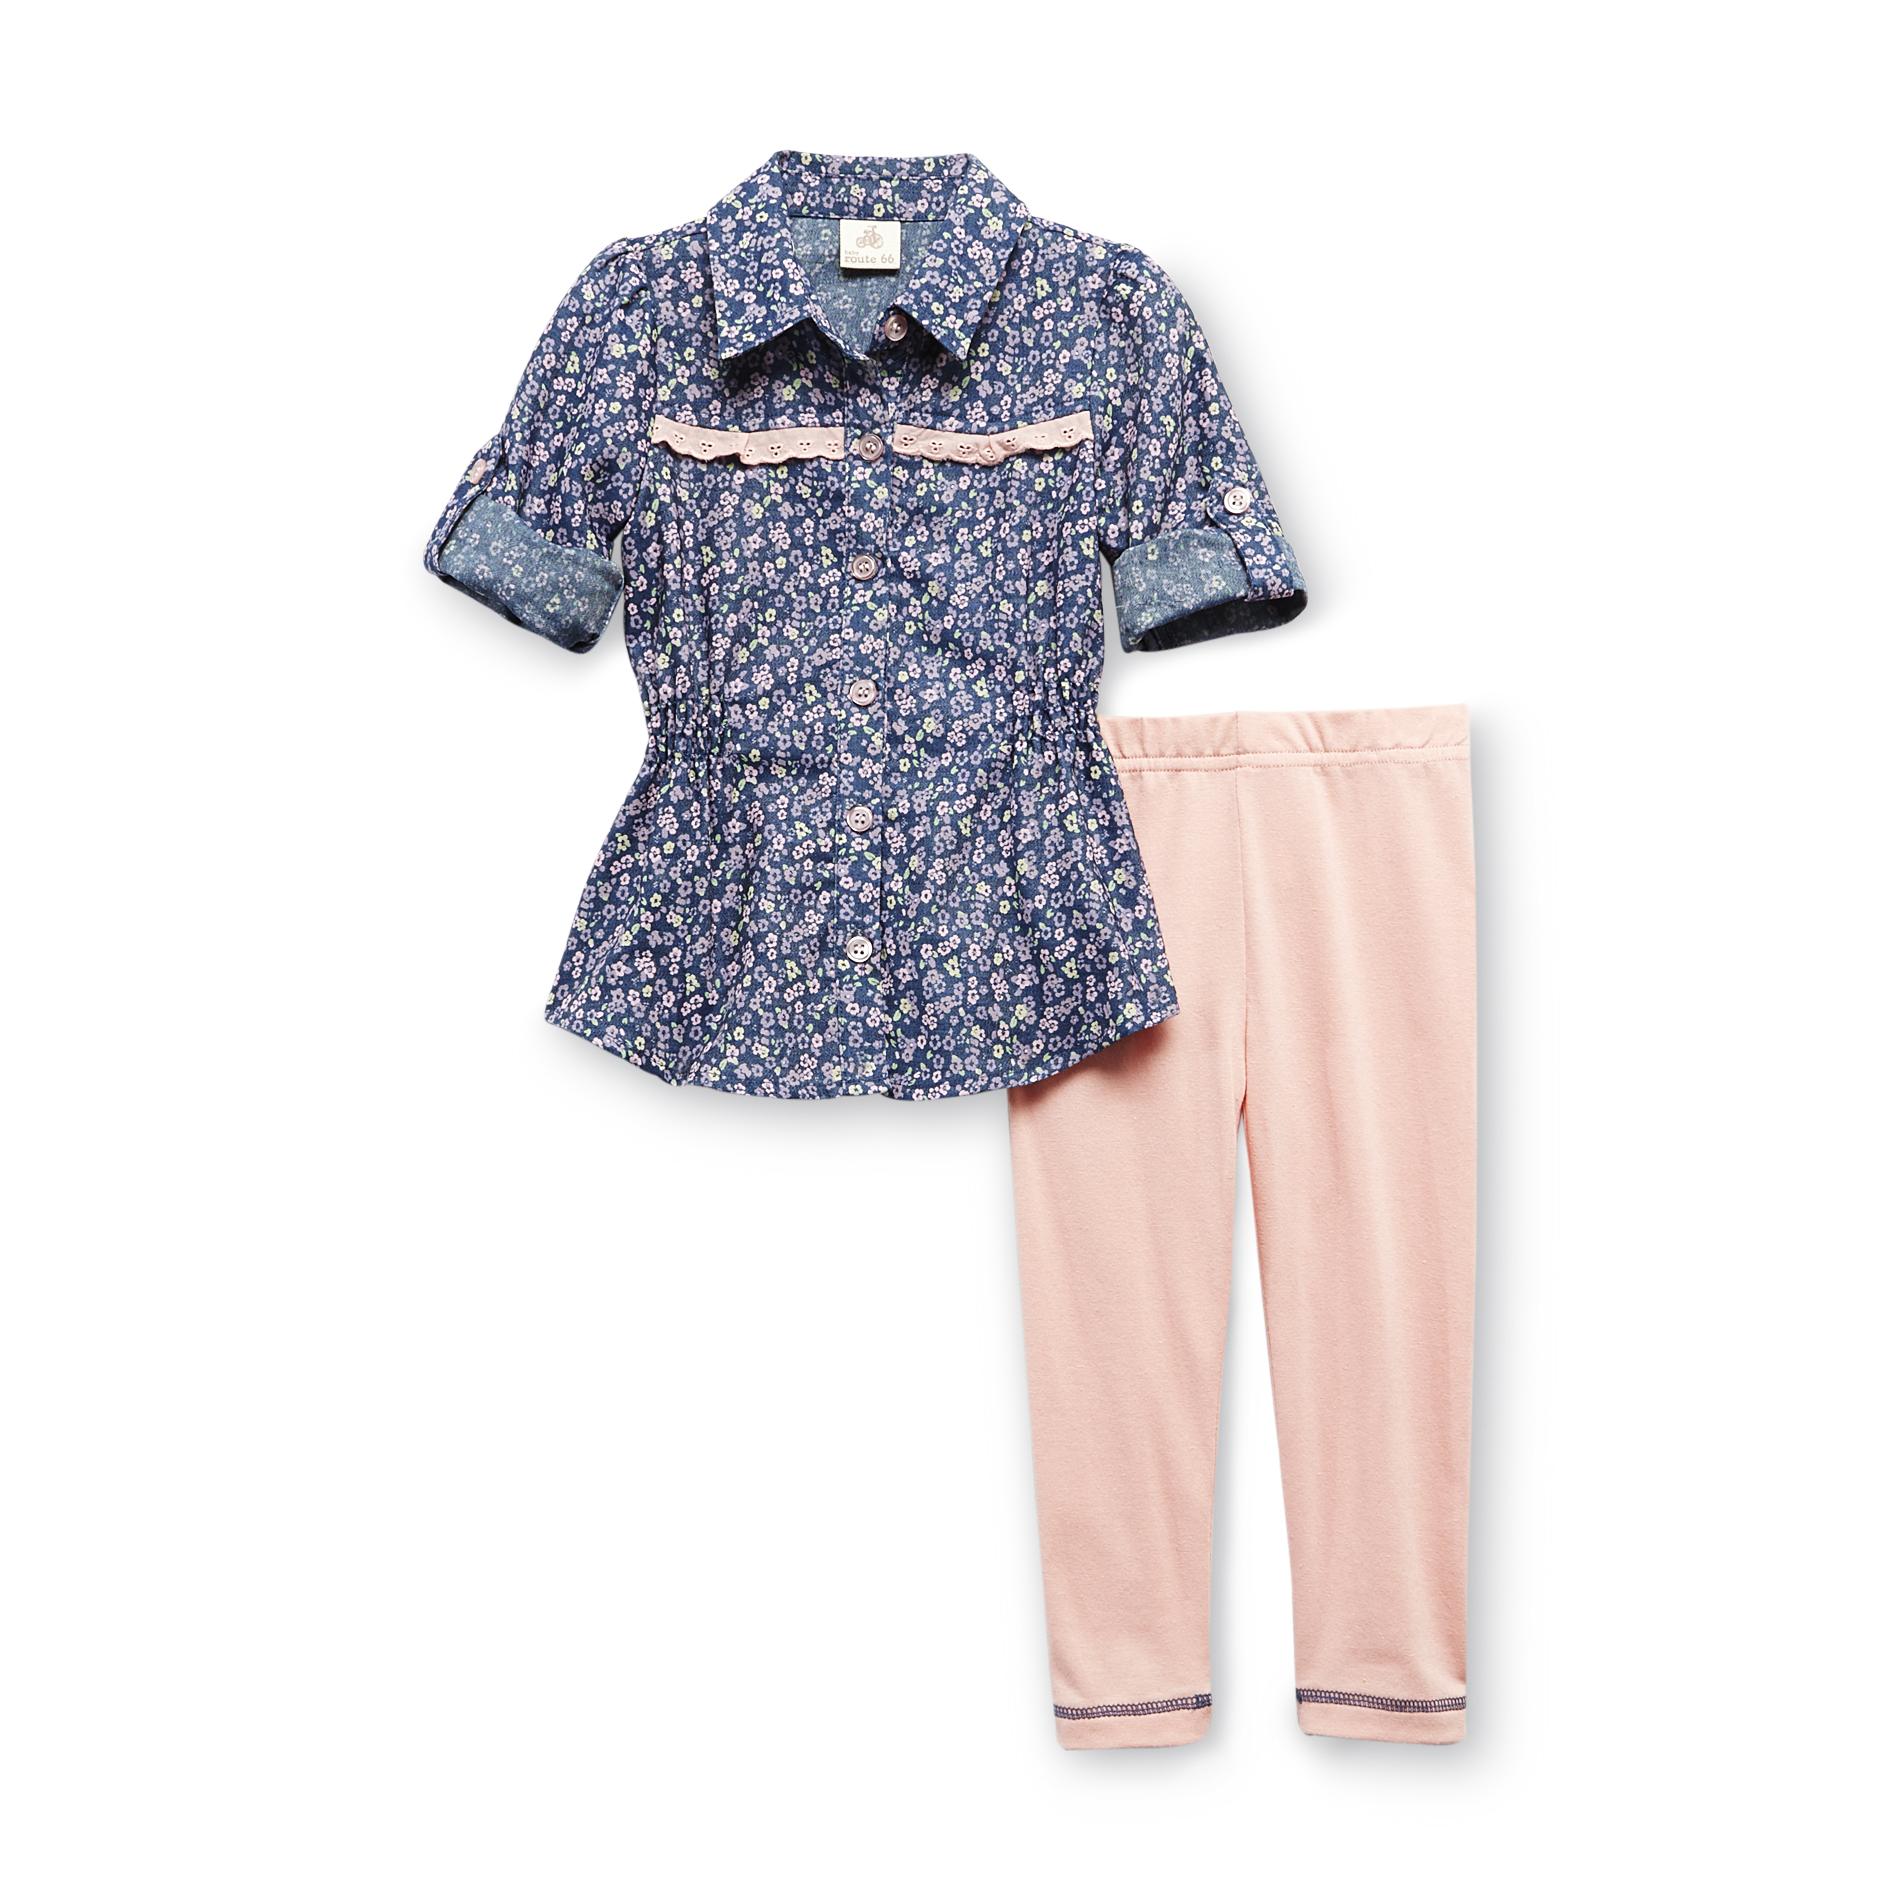 Route 66 Infant & Toddler Girl's Chambray Shirt & Leggings - Floral Print